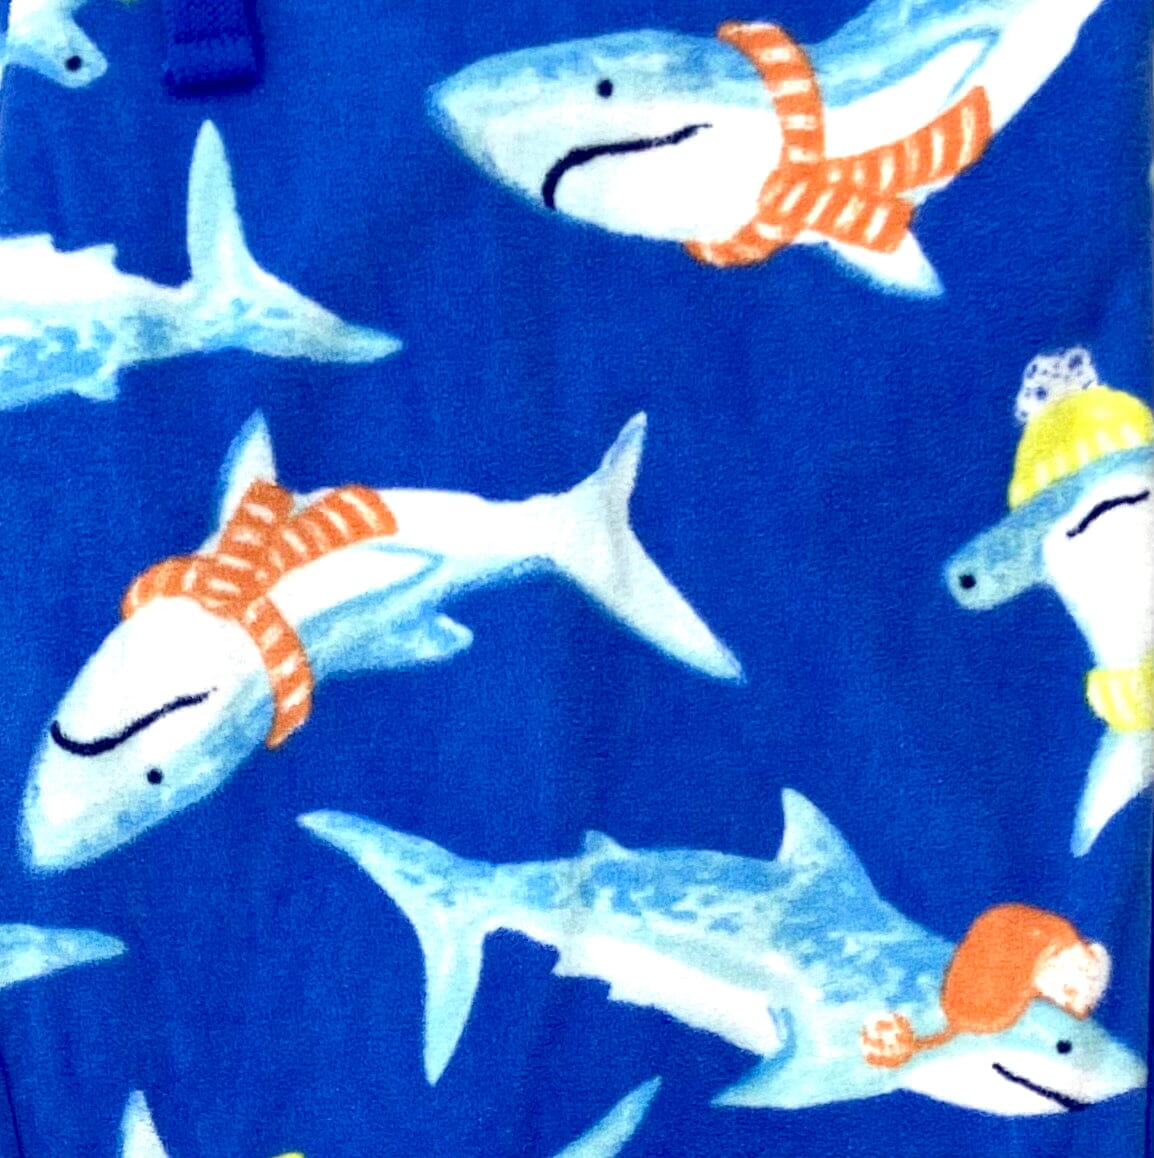 Men's Winter Cozy Fleece Pajama Pant Bottoms with Funny Shark Print